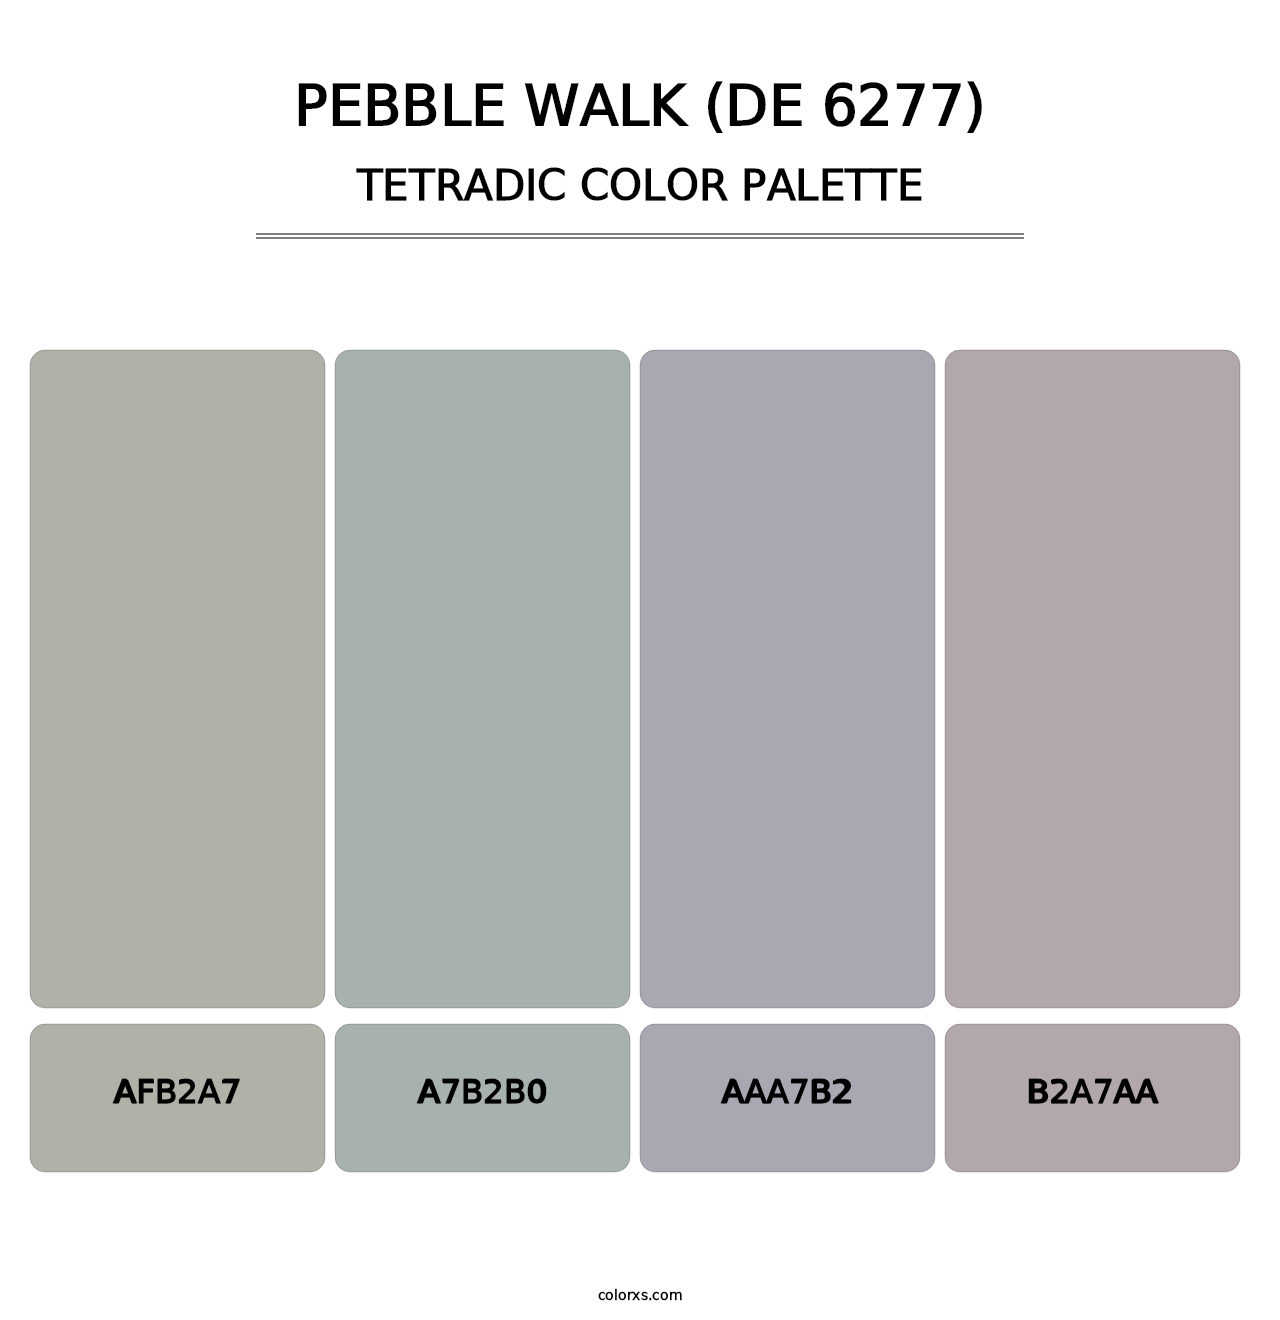 Pebble Walk (DE 6277) - Tetradic Color Palette